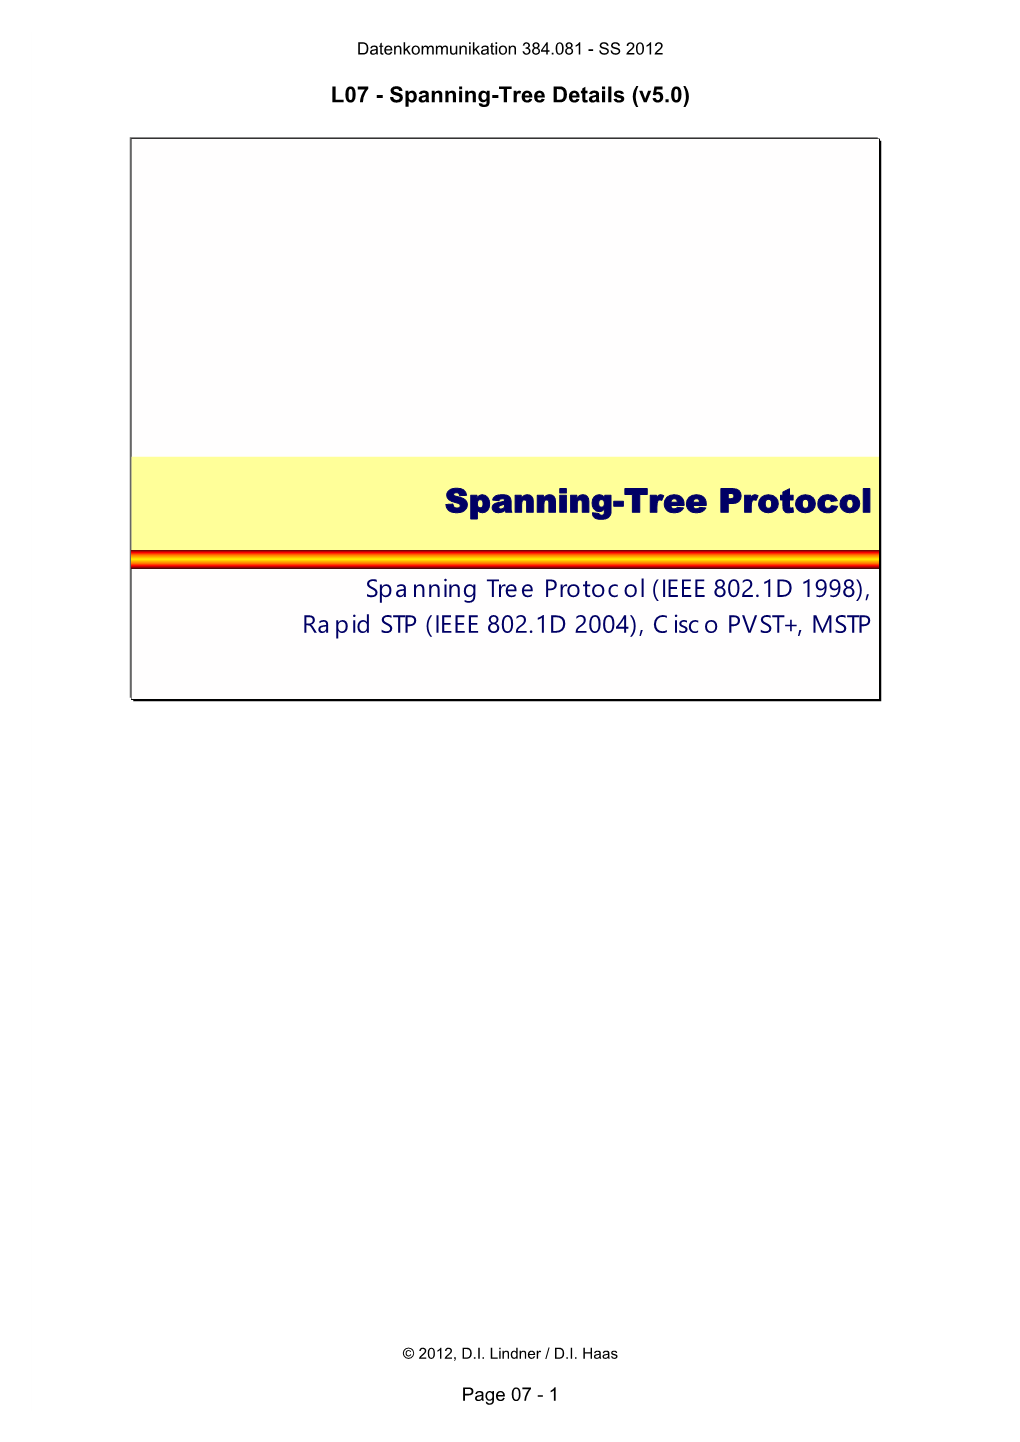 Spanning-Tree Protocol